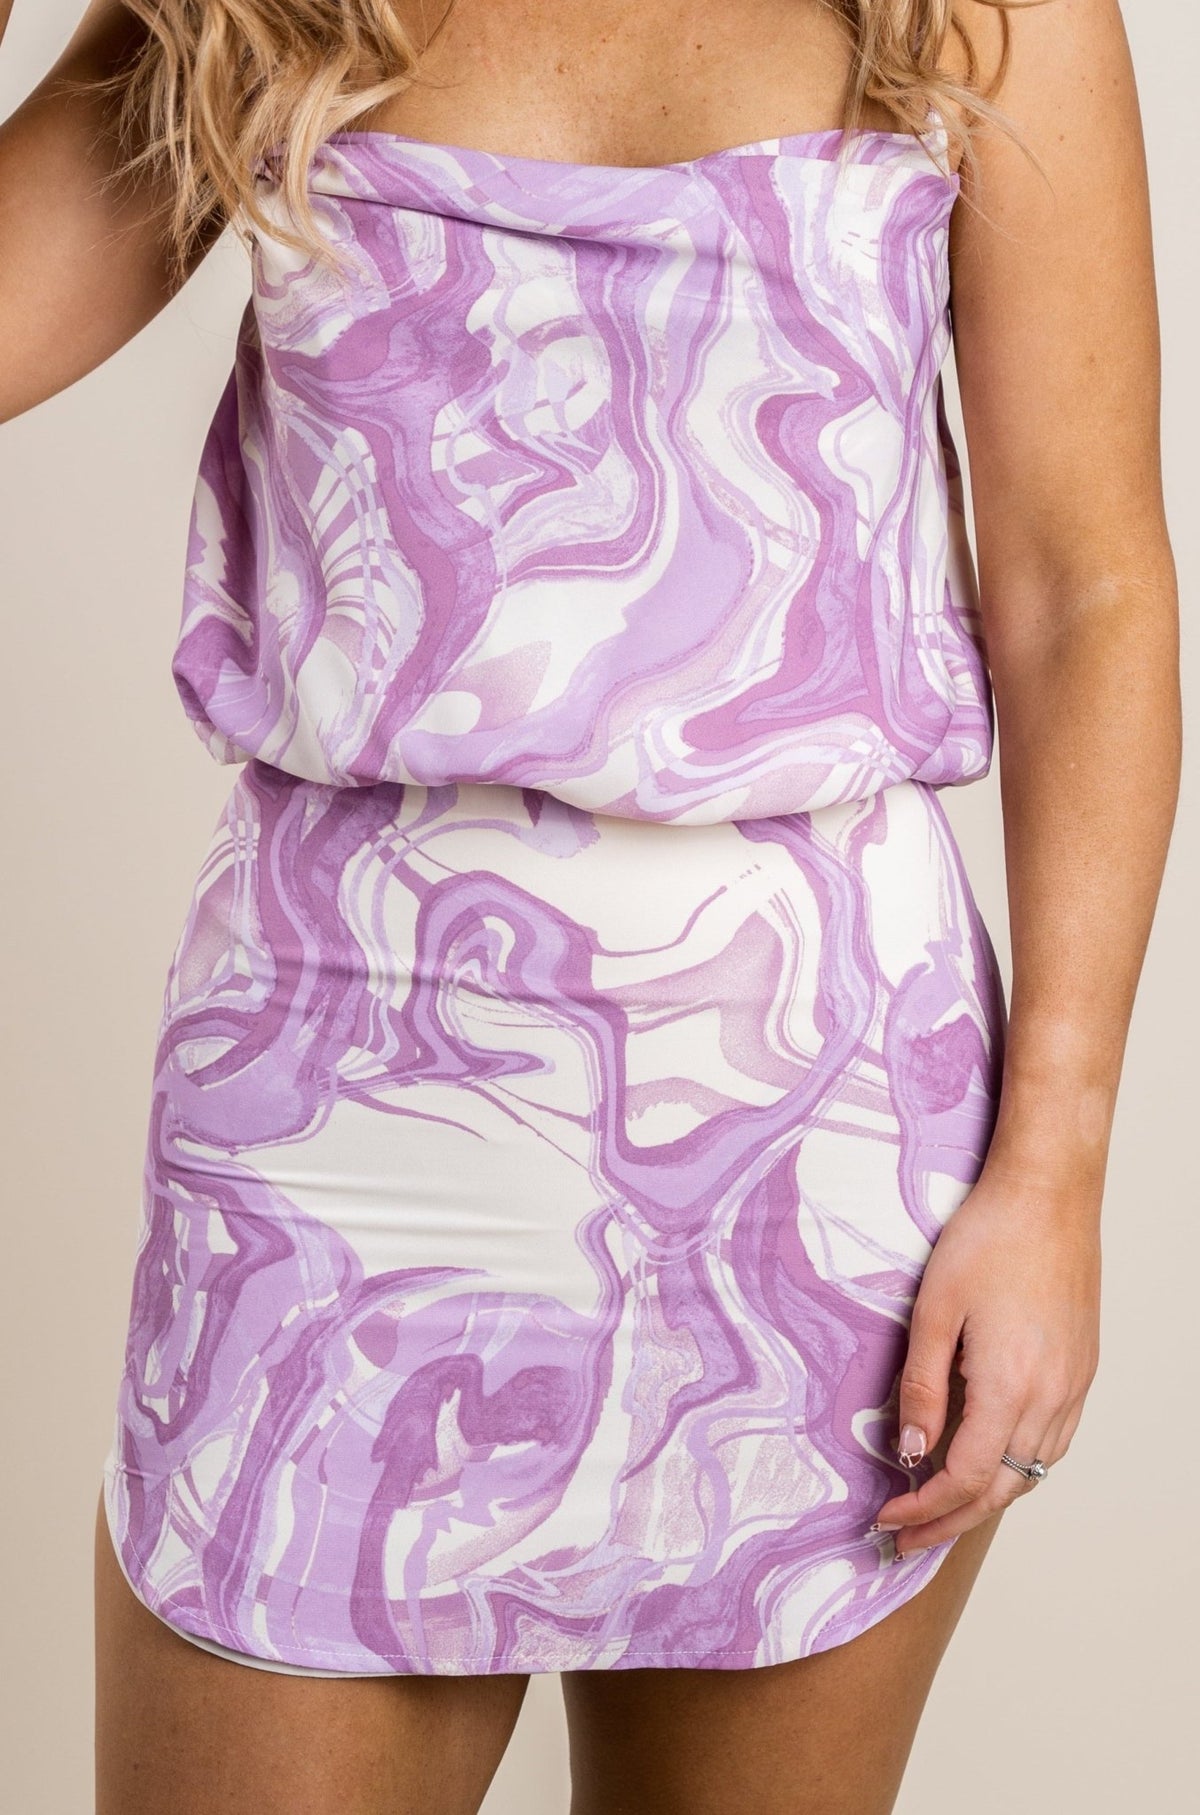 Printed mini skirt purple/white | Lush Fashion Lounge: boutique fashion skirts, affordable boutique skirts, cute affordable skirts